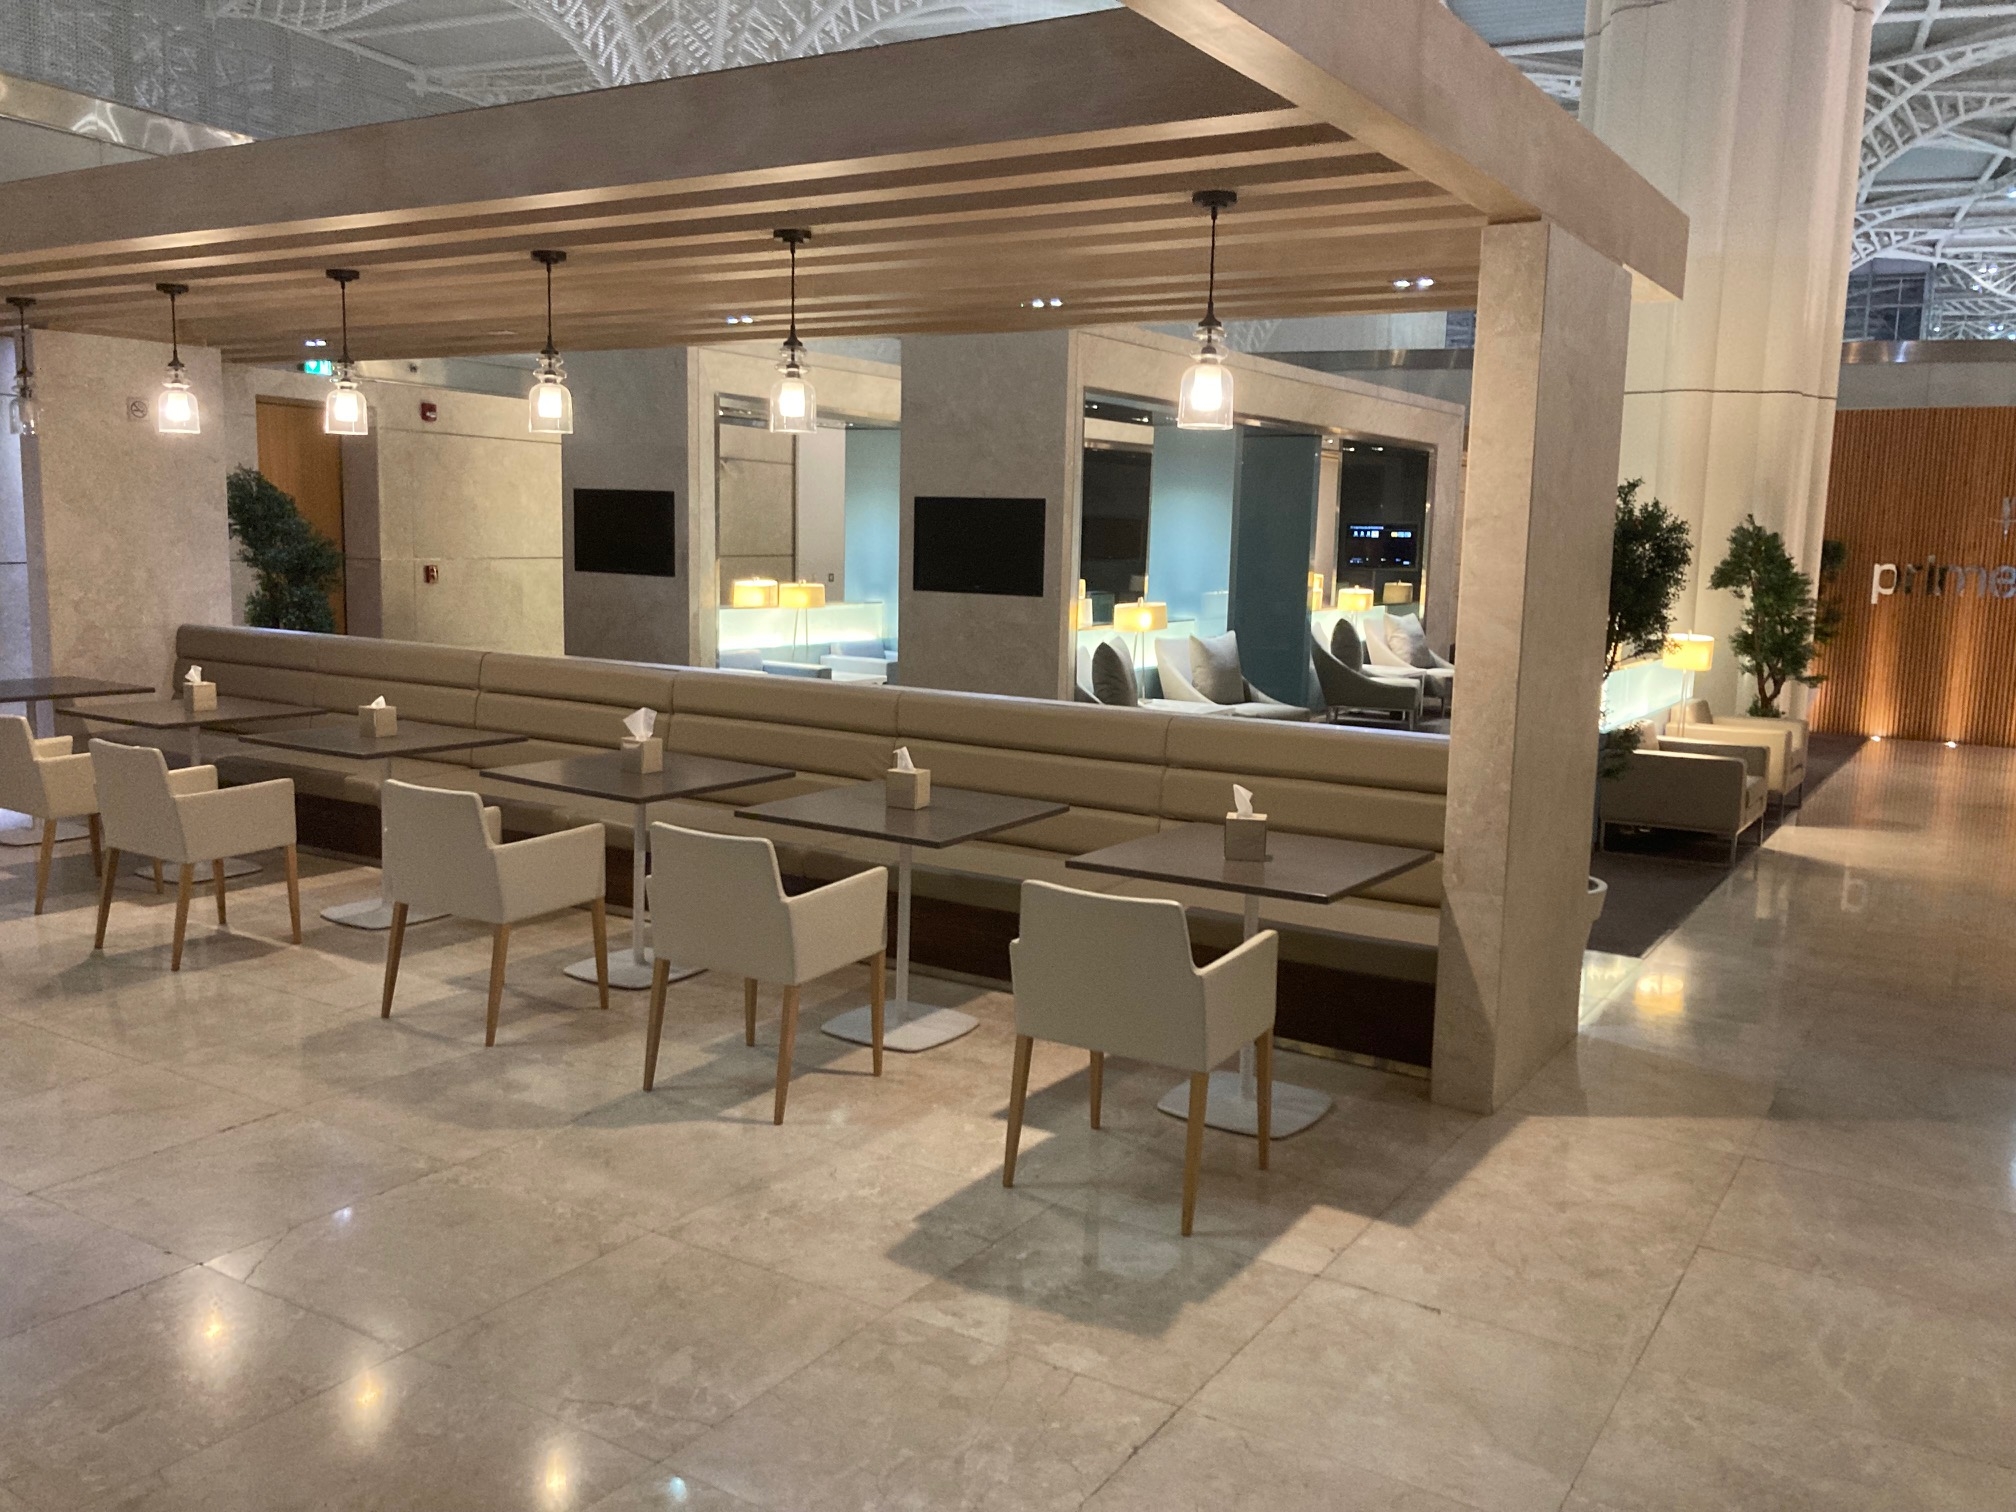 Madinah Airport- Primeclass Lounge 4